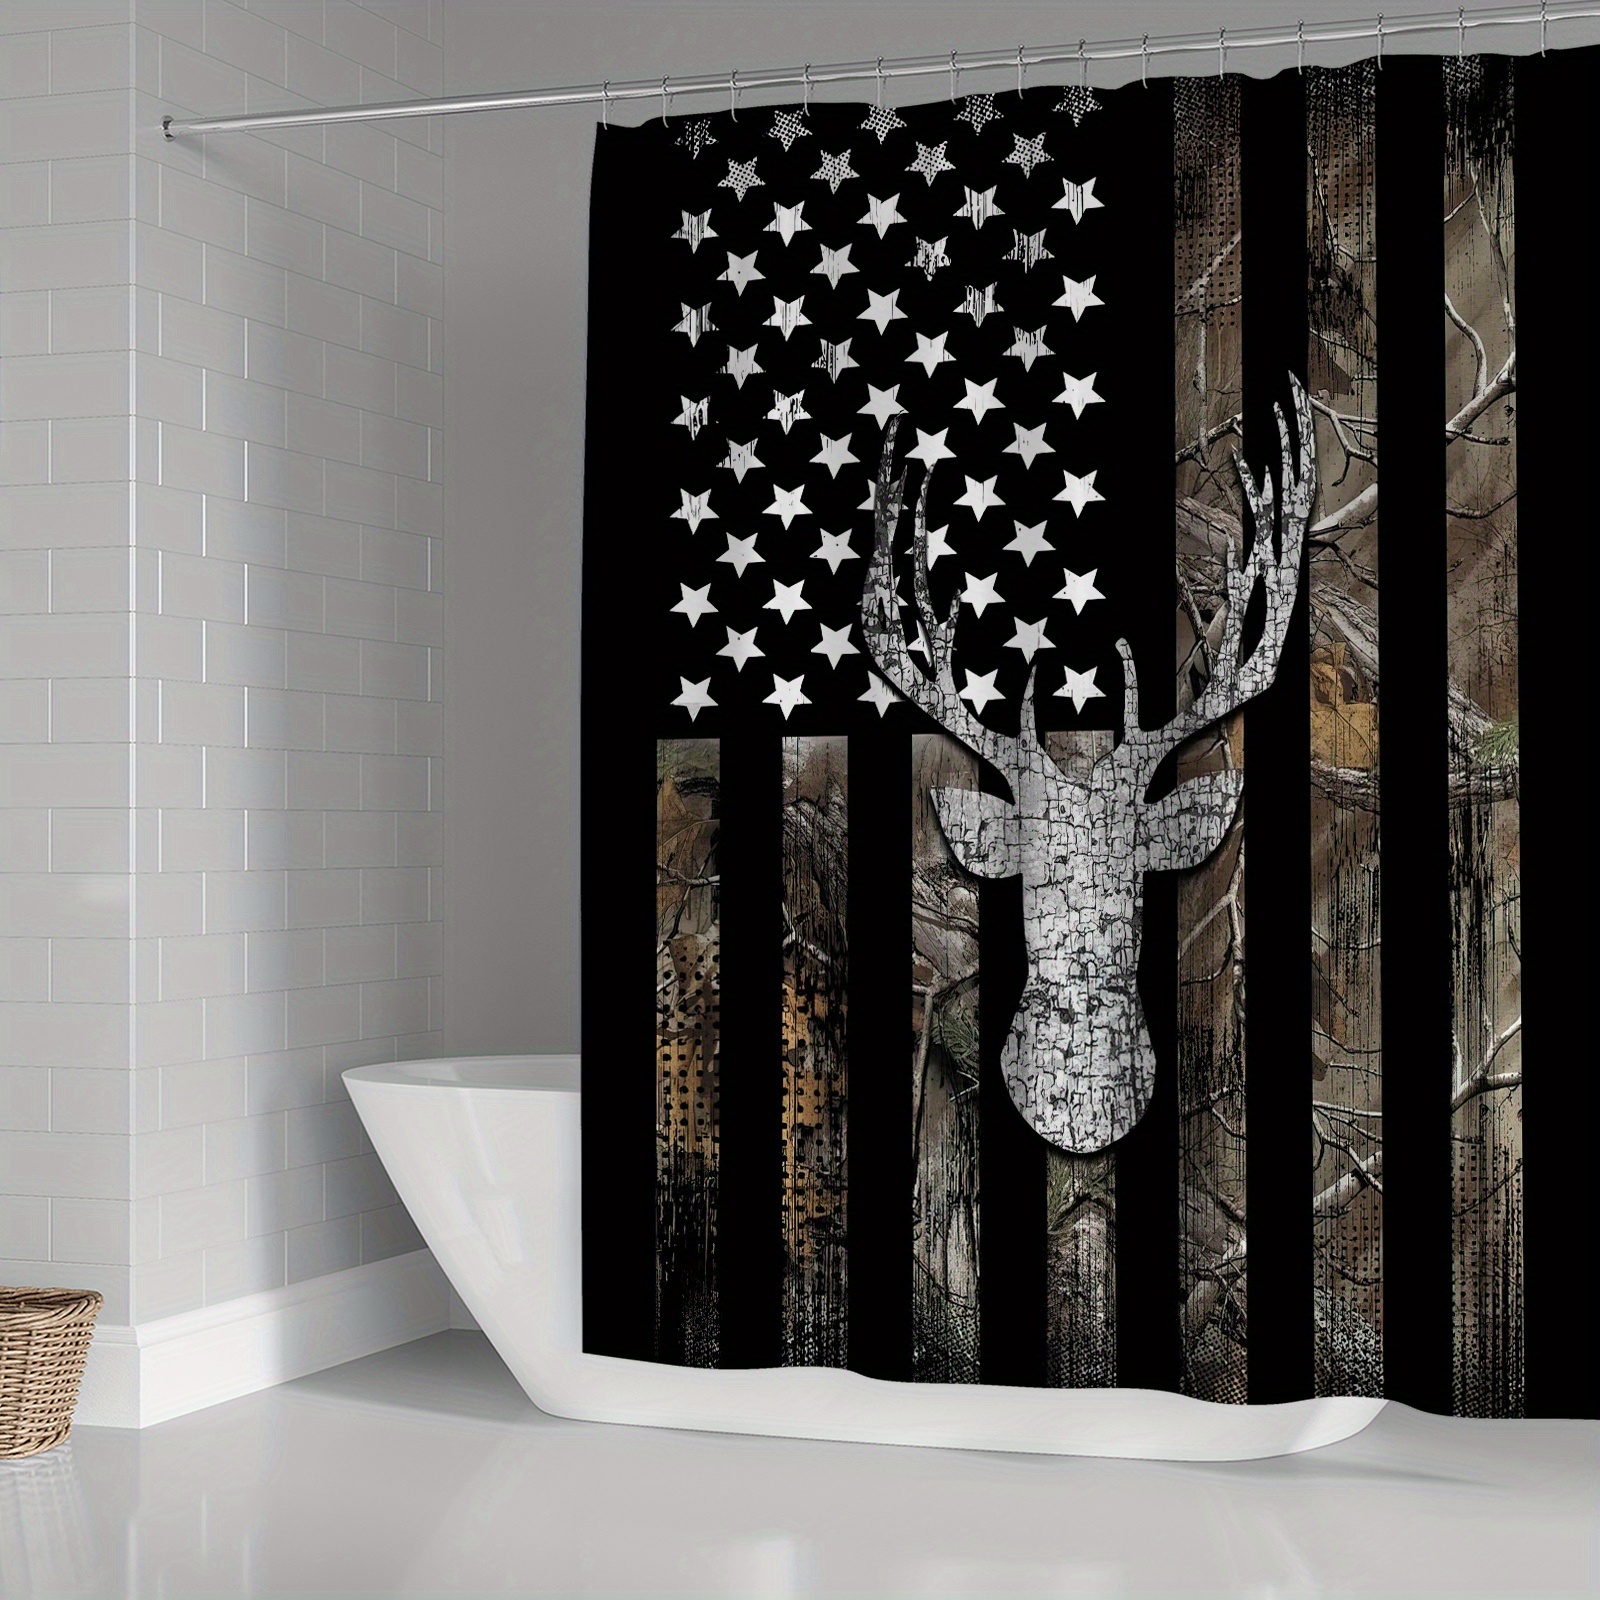 Native Wildlife Bathroom Set (3pcs), Black Forest Decor